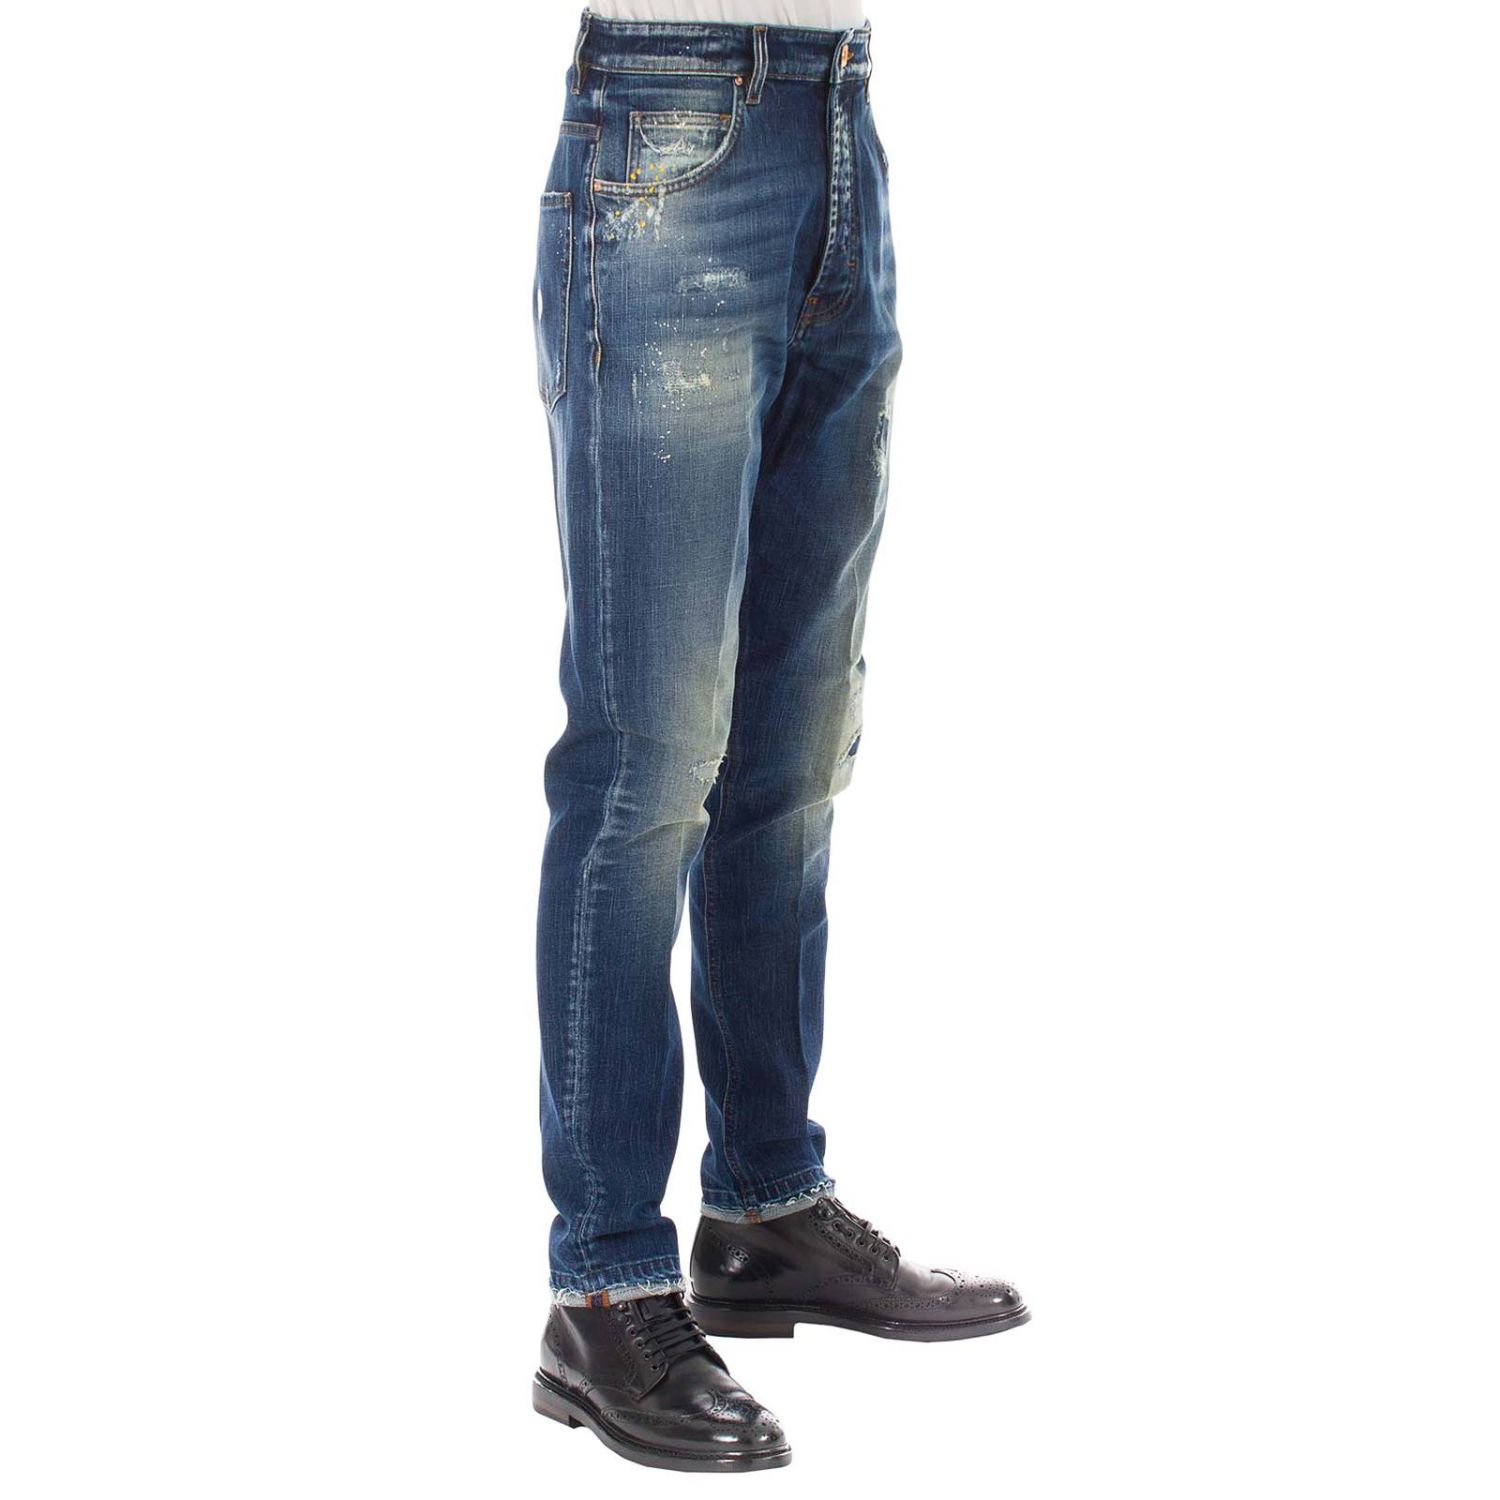 Don The Fuller Outlet: jeans for man - Blue | Don The Fuller jeans ...